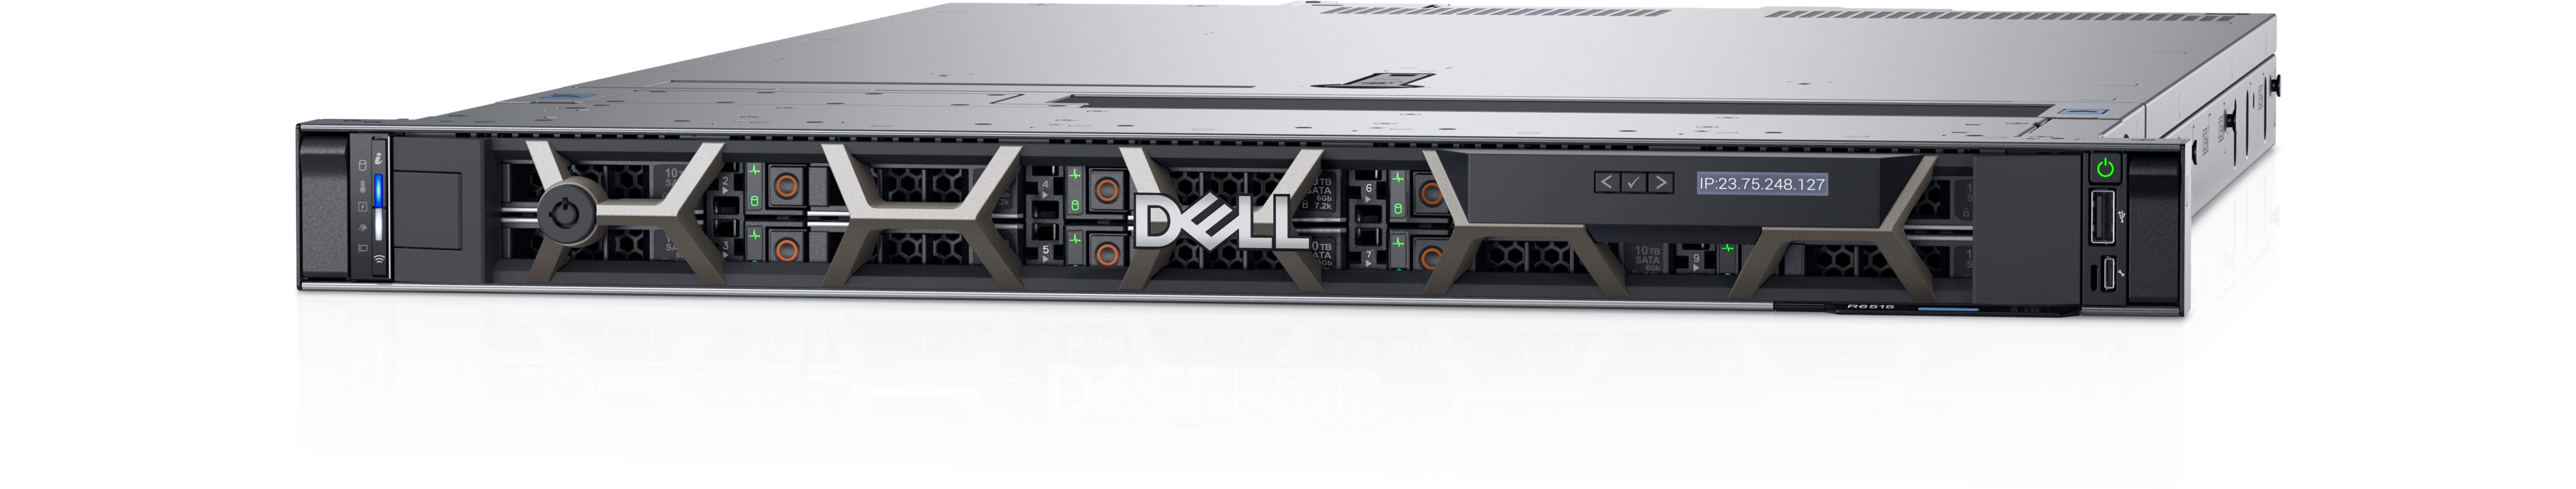 yDellzDell PowerEdge R6515 Server